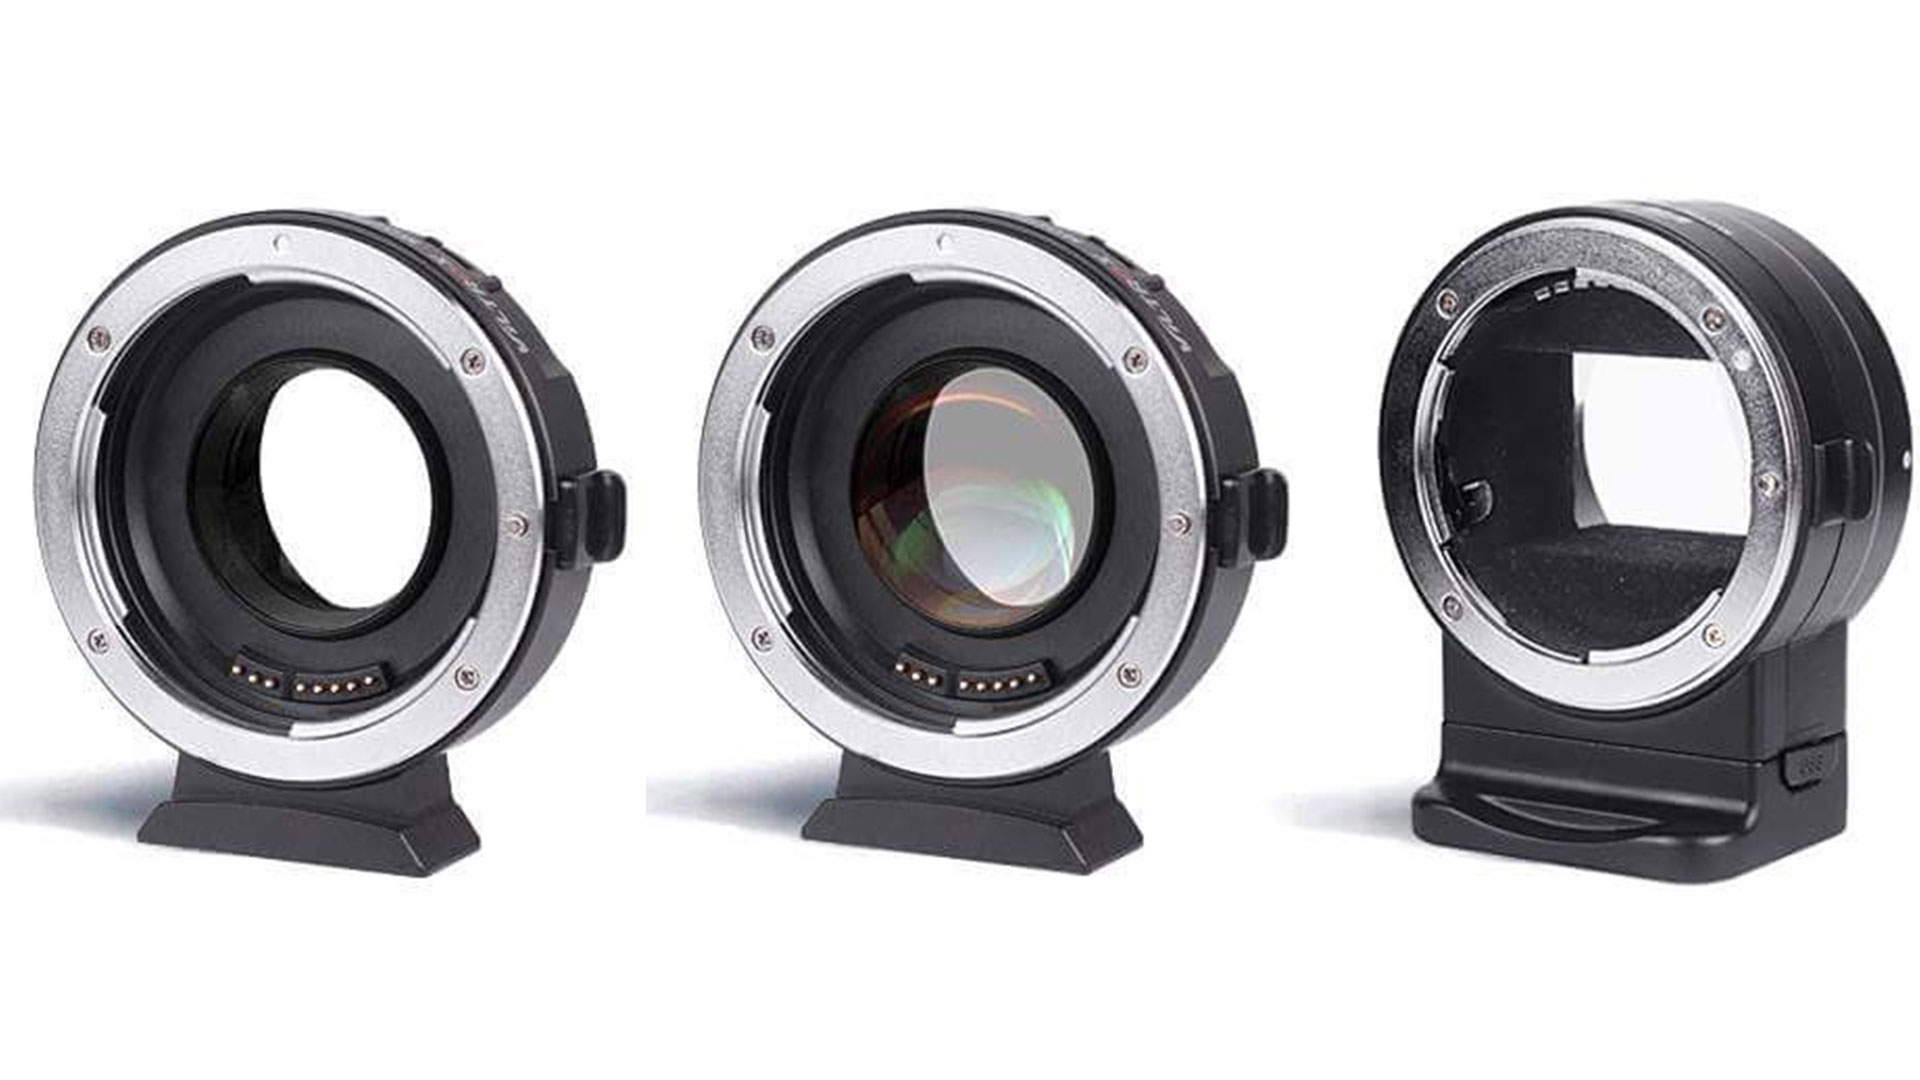 Viltrox lens adapters: budget friendly E-mount and MFT Metabones alternatives